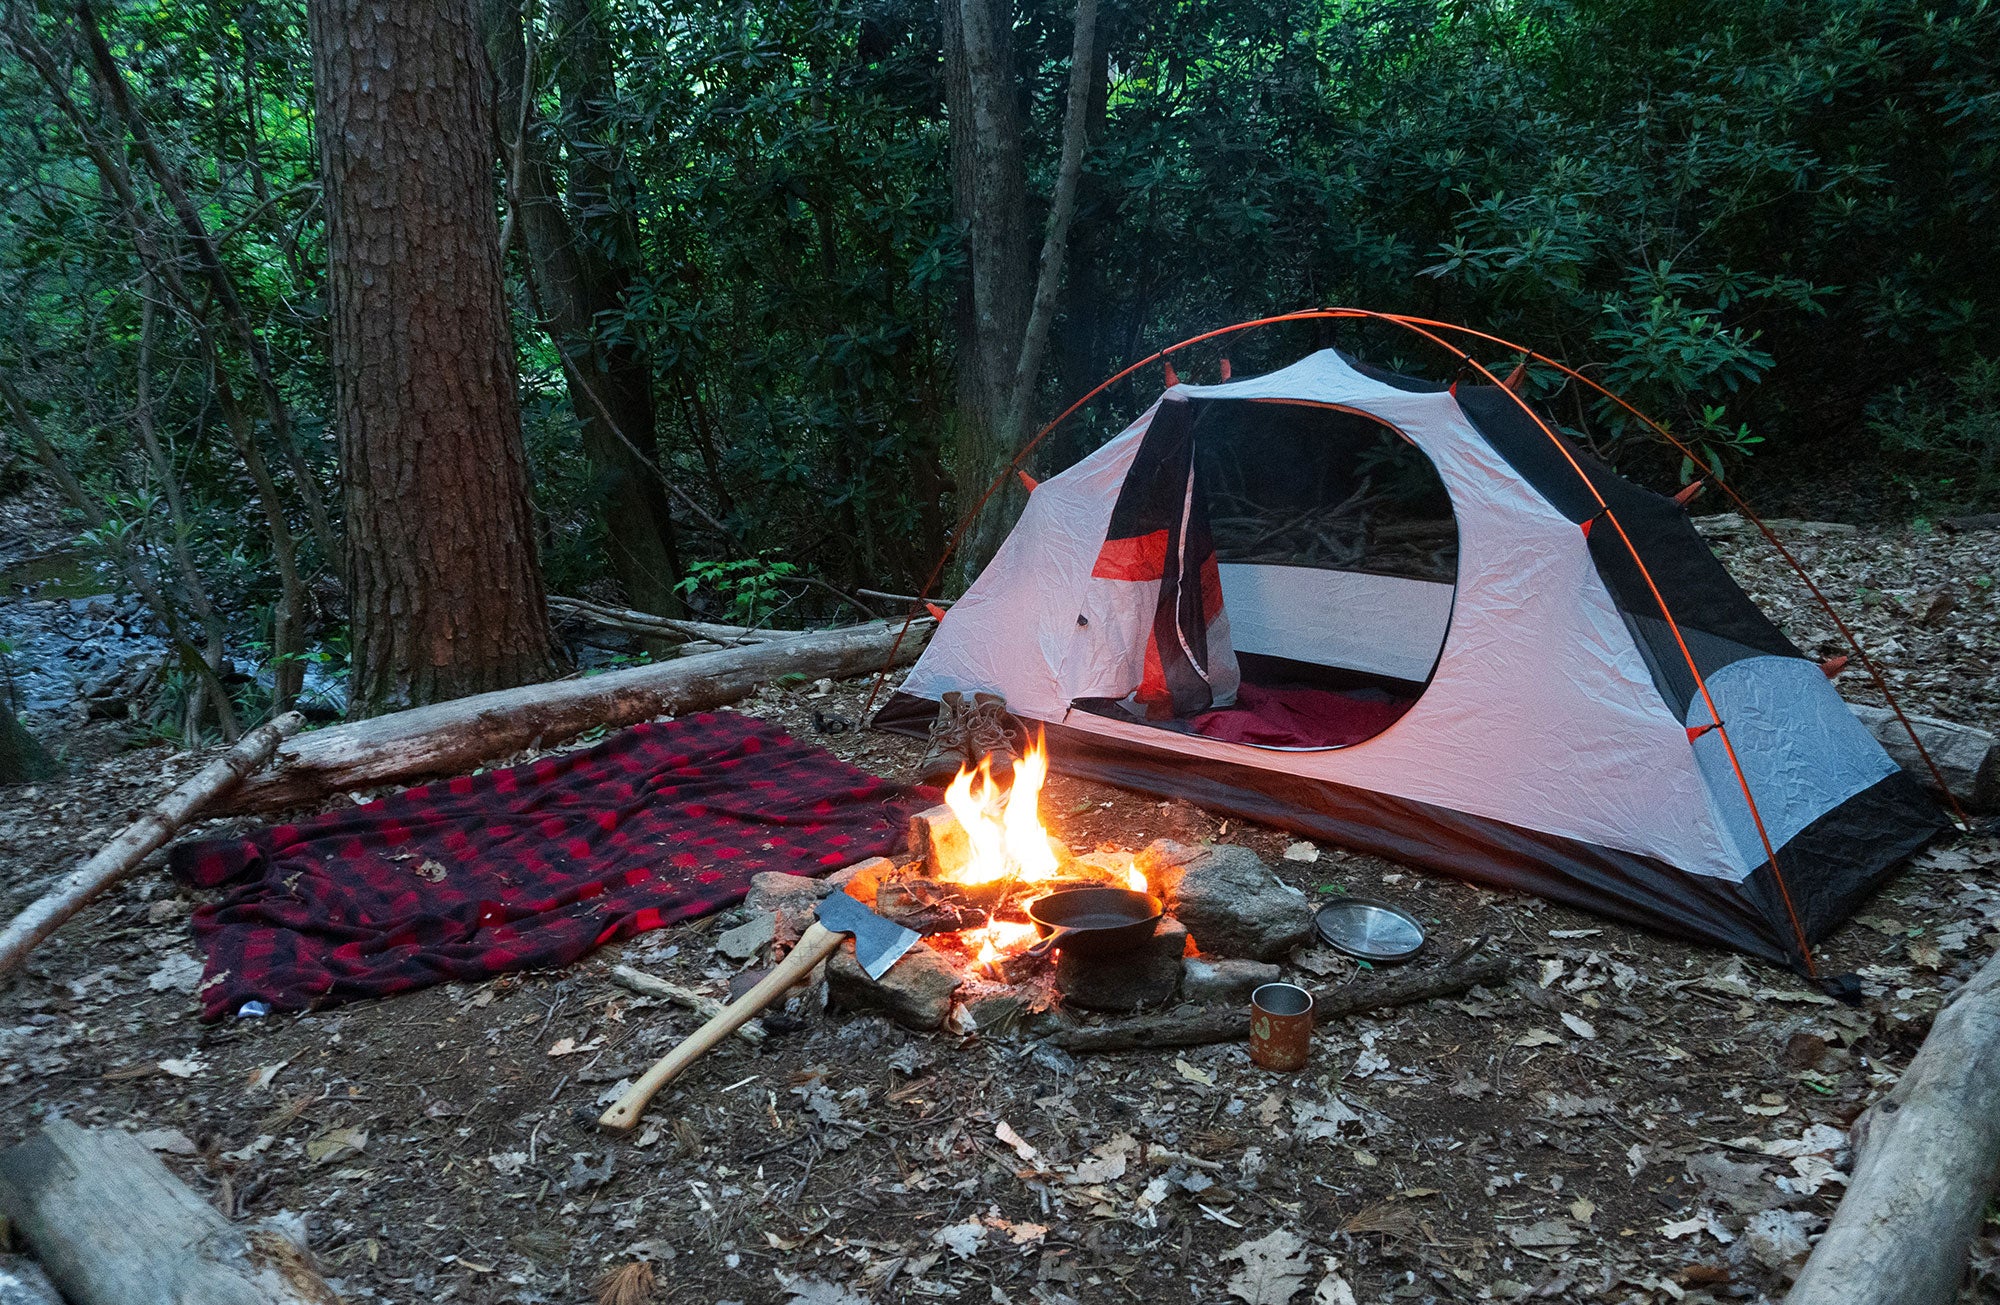 domineren bereiken af hebben How to Find Free Camping Anywhere in the U.S.